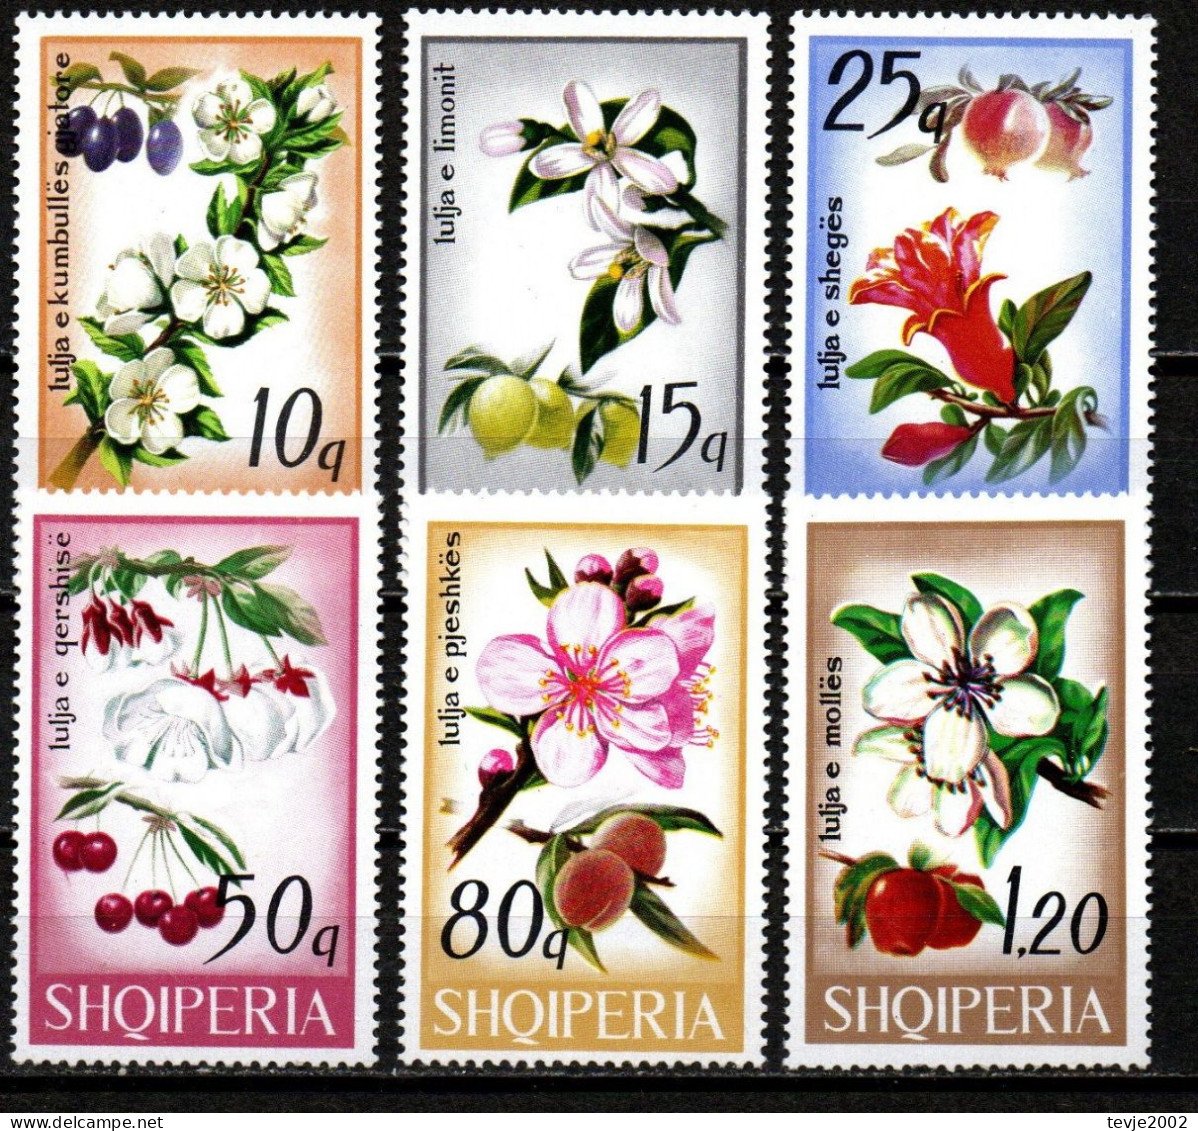 Albanien 1969 - Mi.Nr. 1362 - 1367 - Postfrisch MNH - Pflanzen Plants Obst Fruits - Fruits